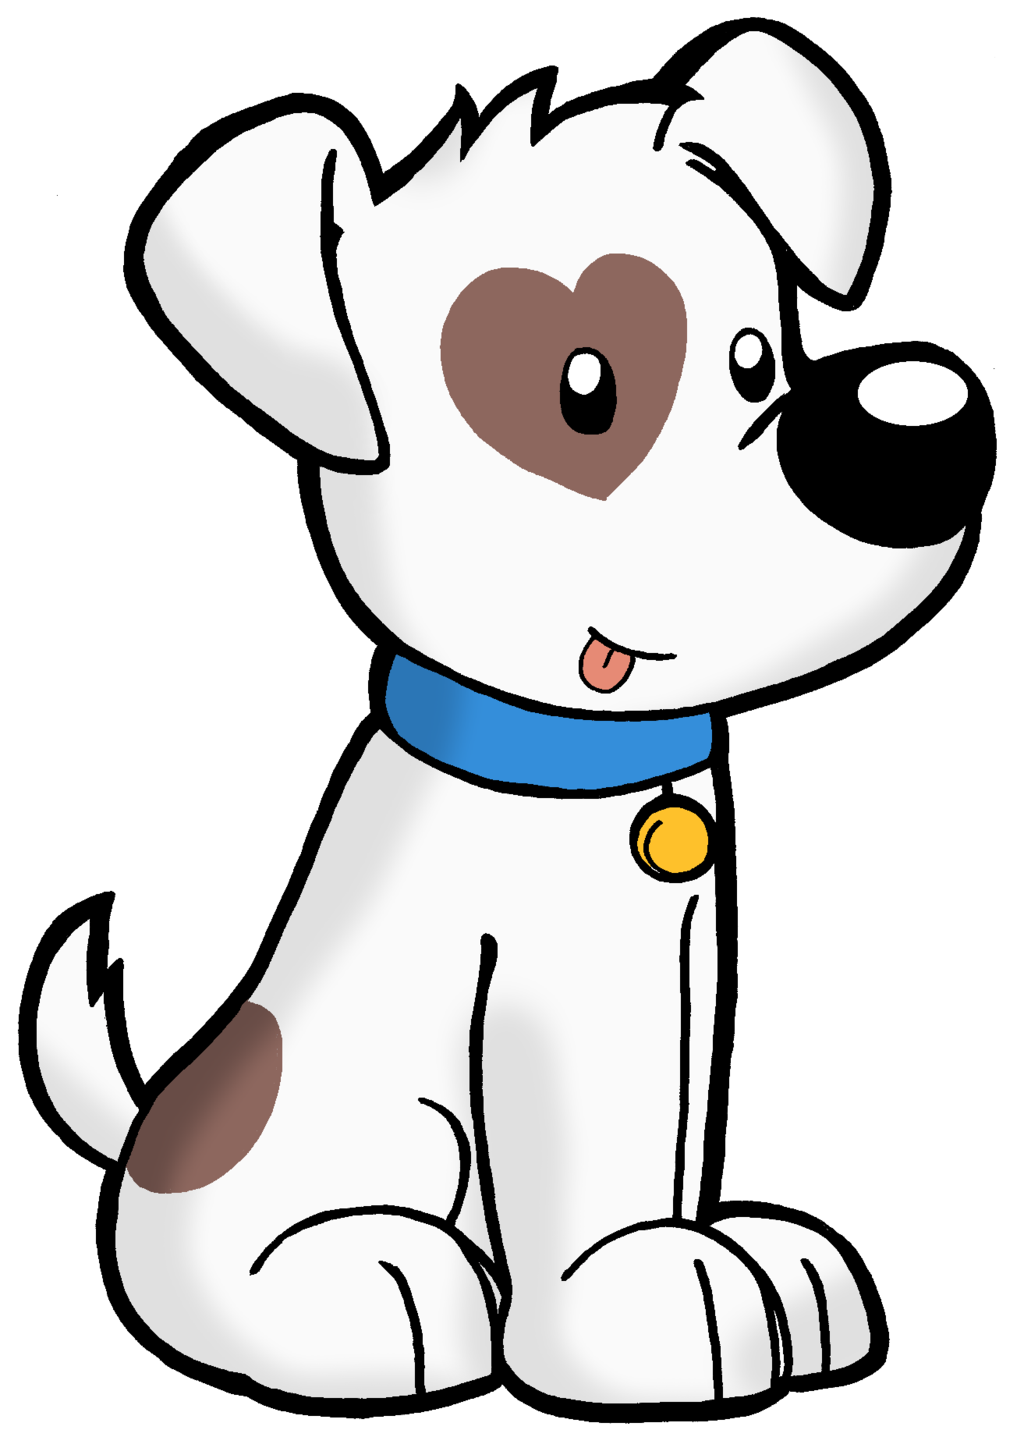  Cartoon Dog image